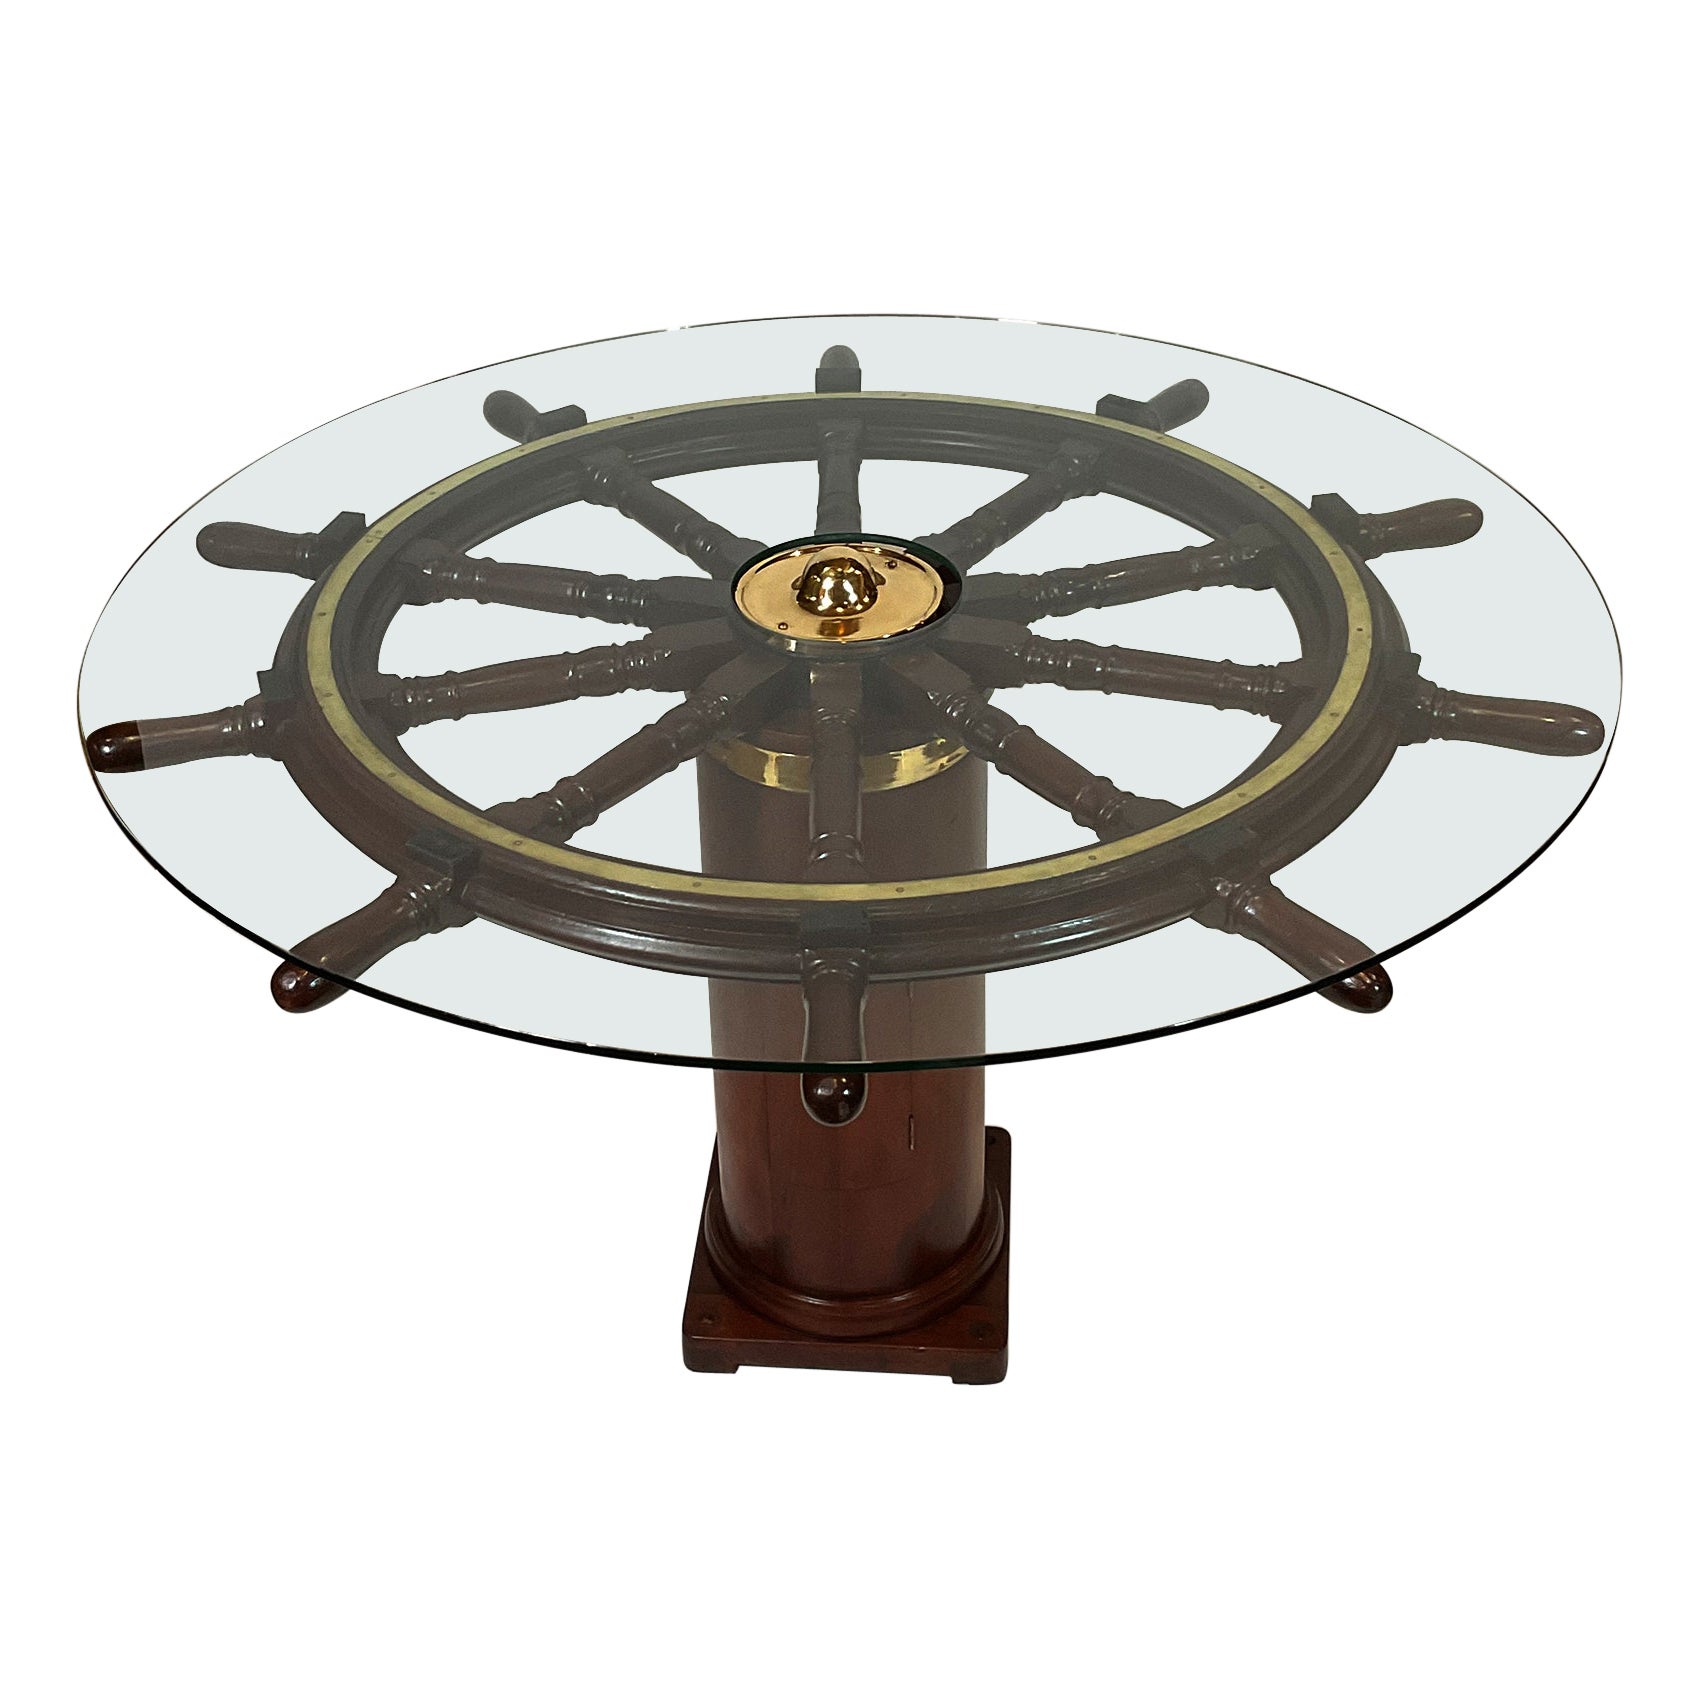 Ten Spoke Antique Ships Wheel Dining Table For Sale